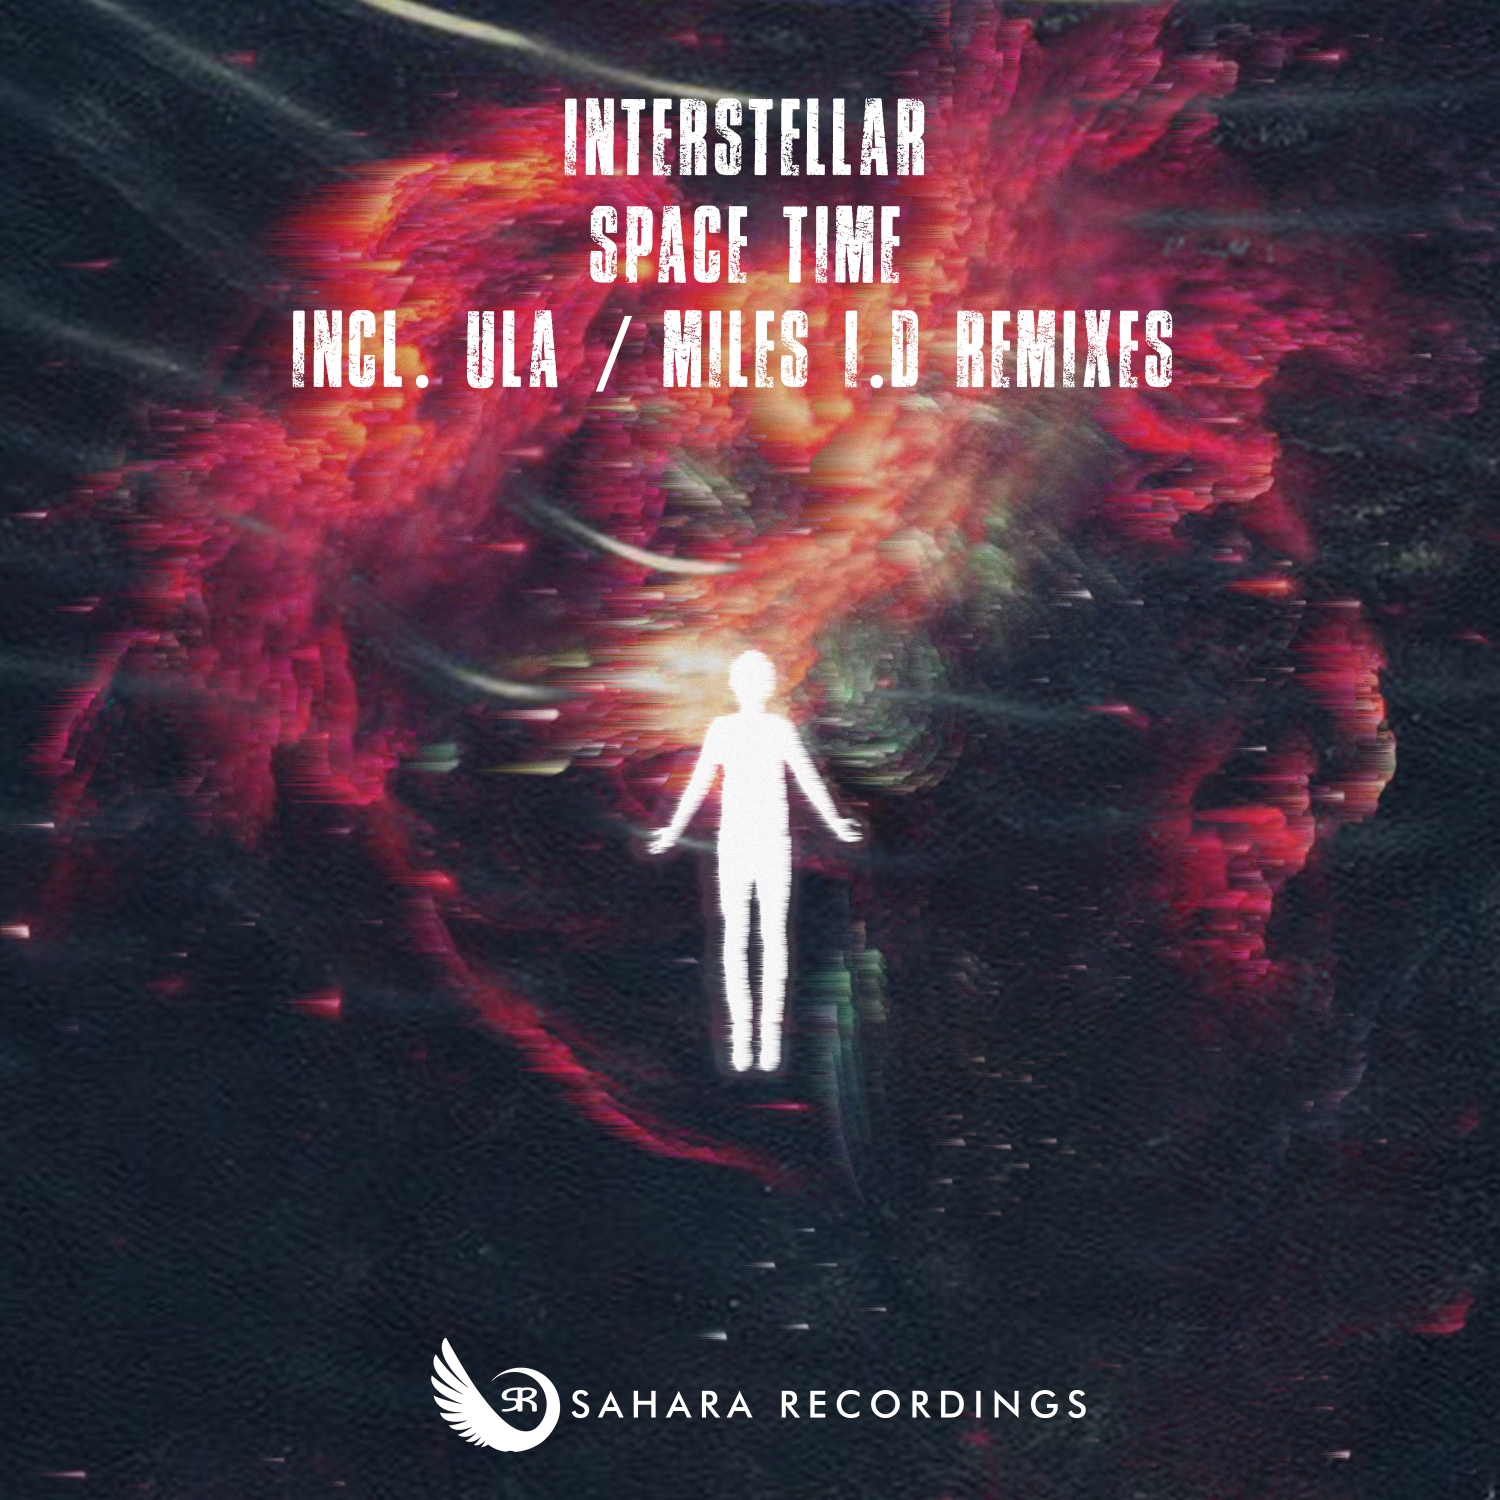 Interstellar presents Space Time on Sahara Recordings